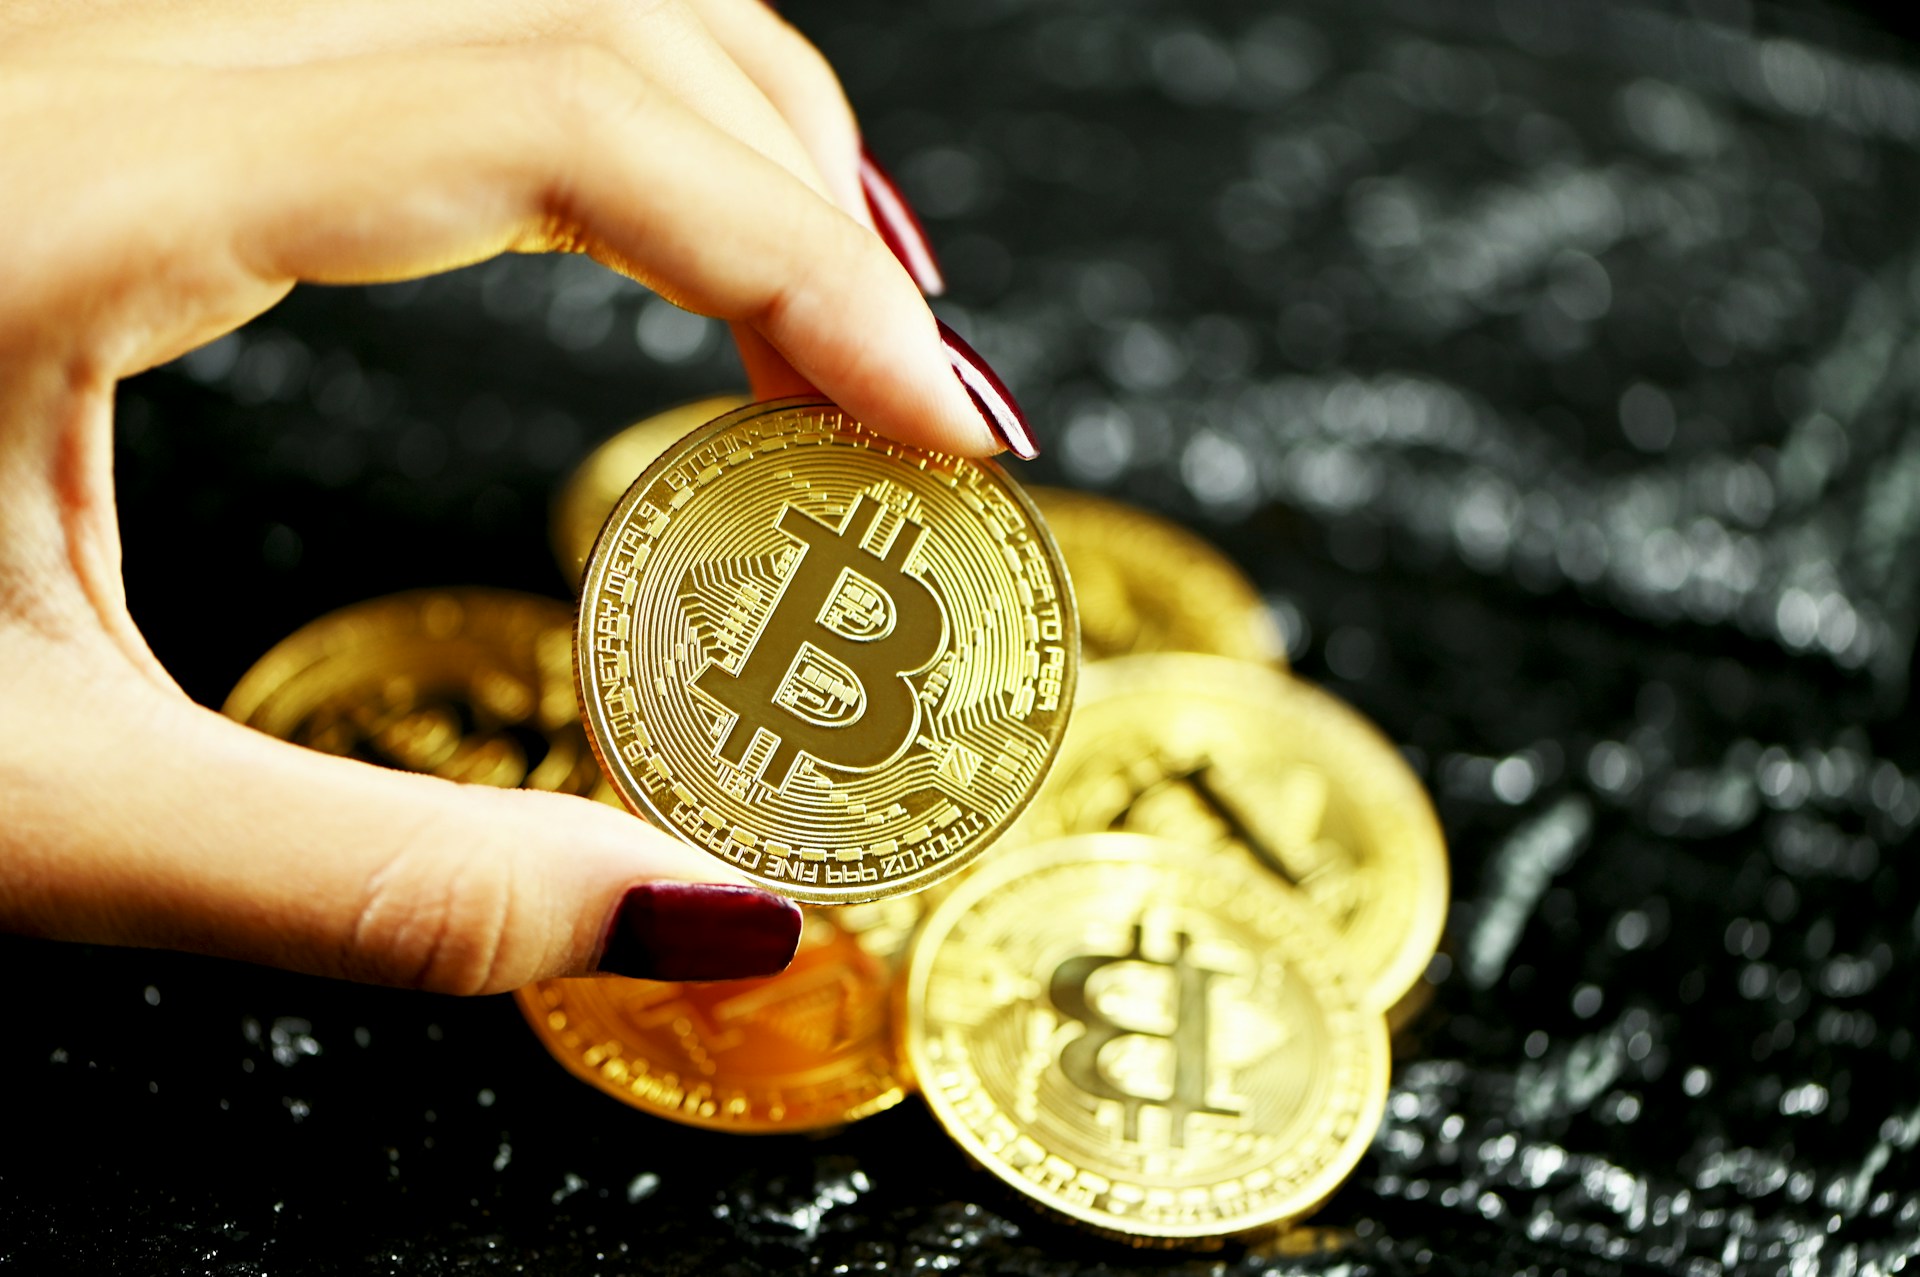 Bitcoin Risks Revisiting Sub-$60,000 Levels